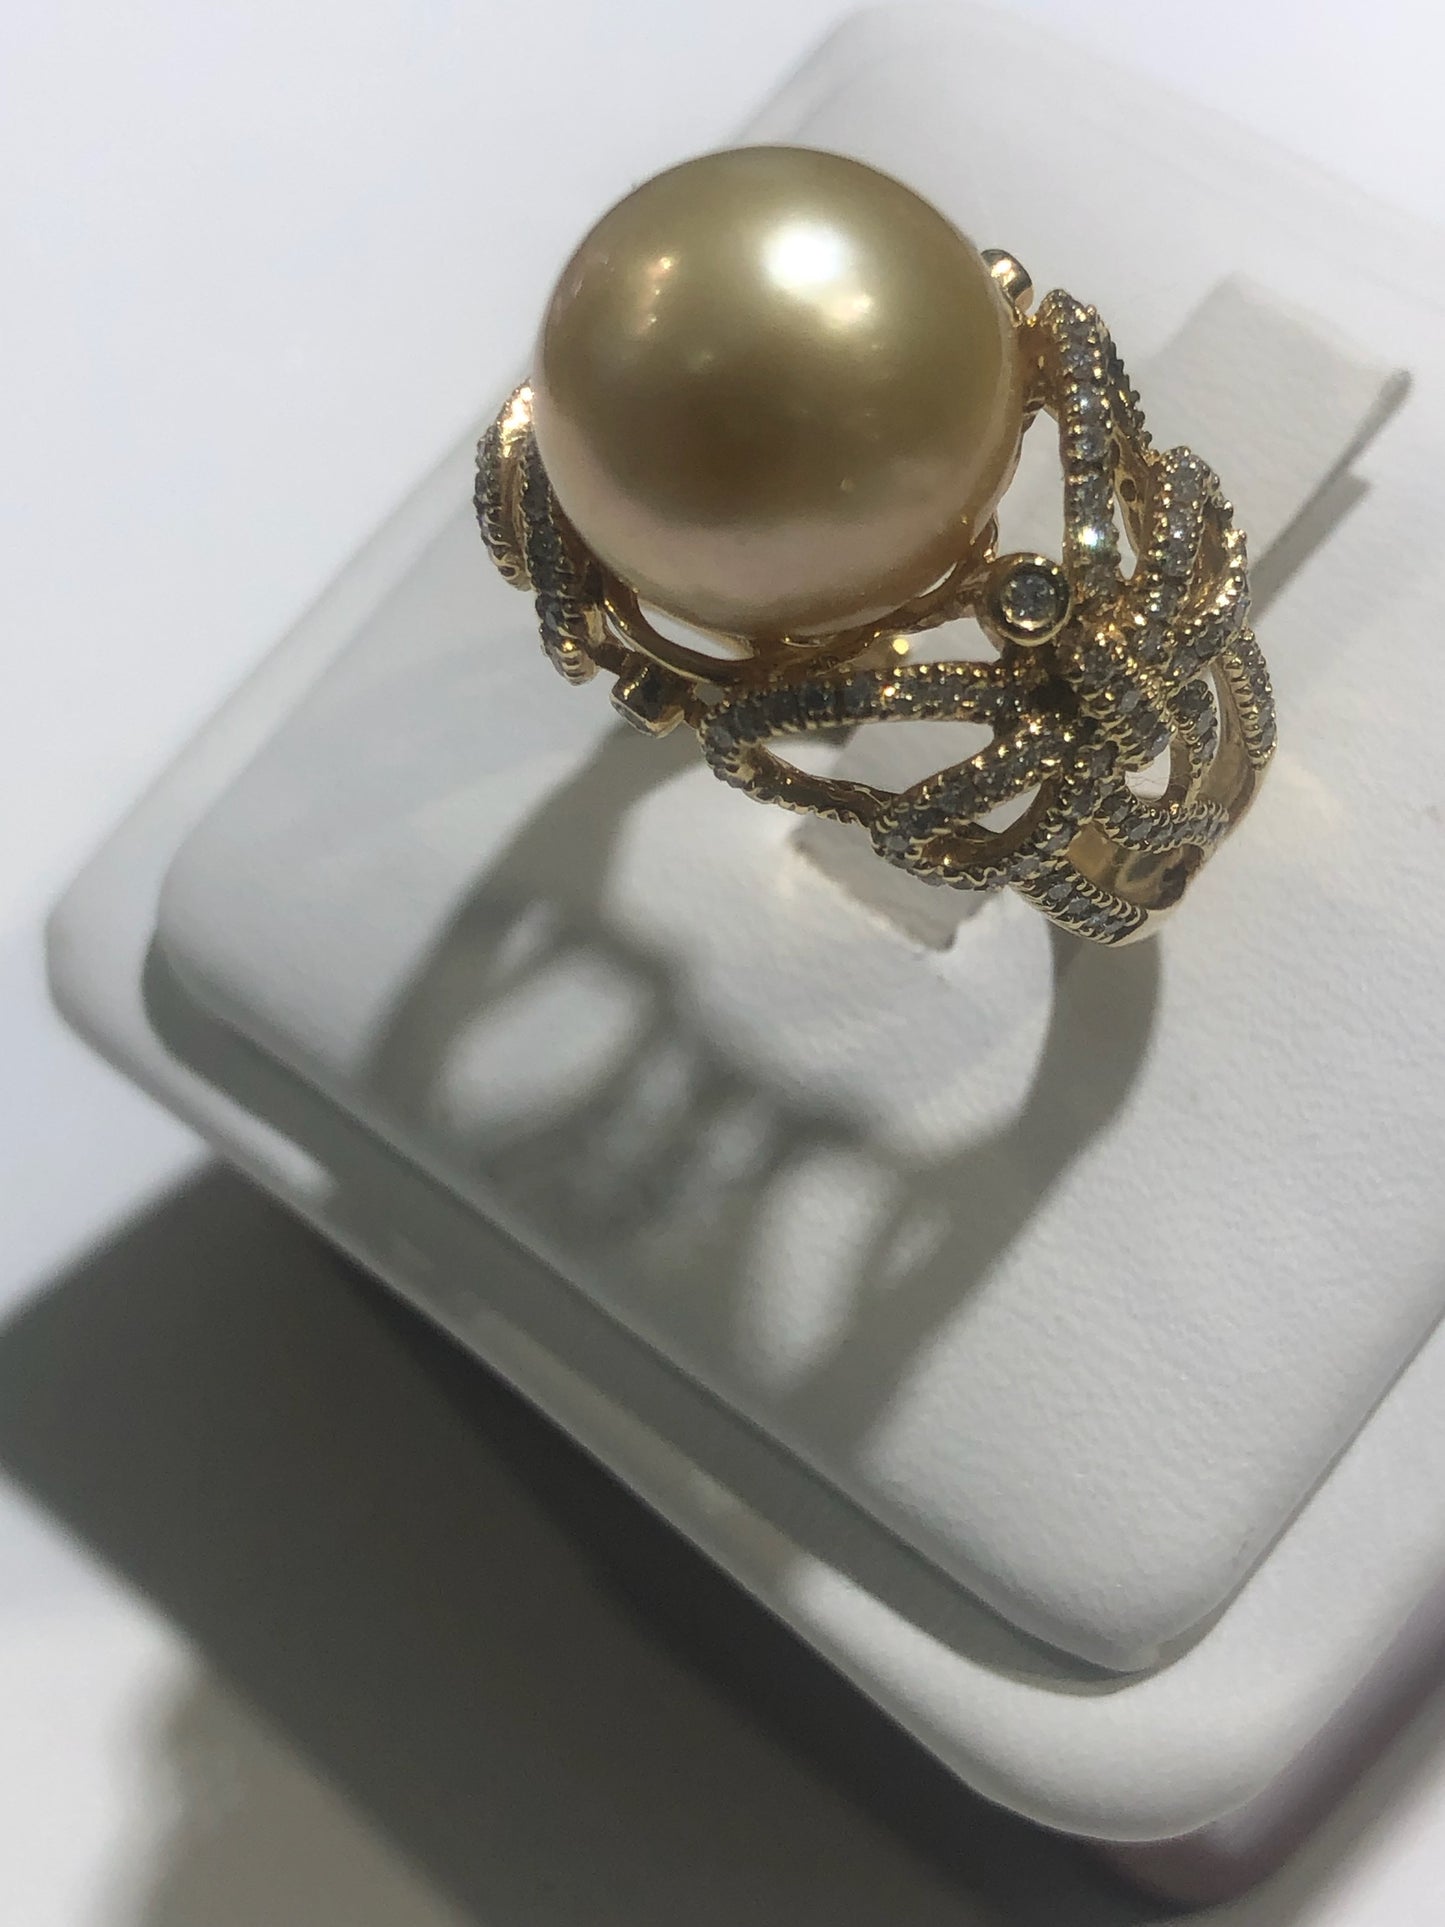 Rare Golden Pearl Ring